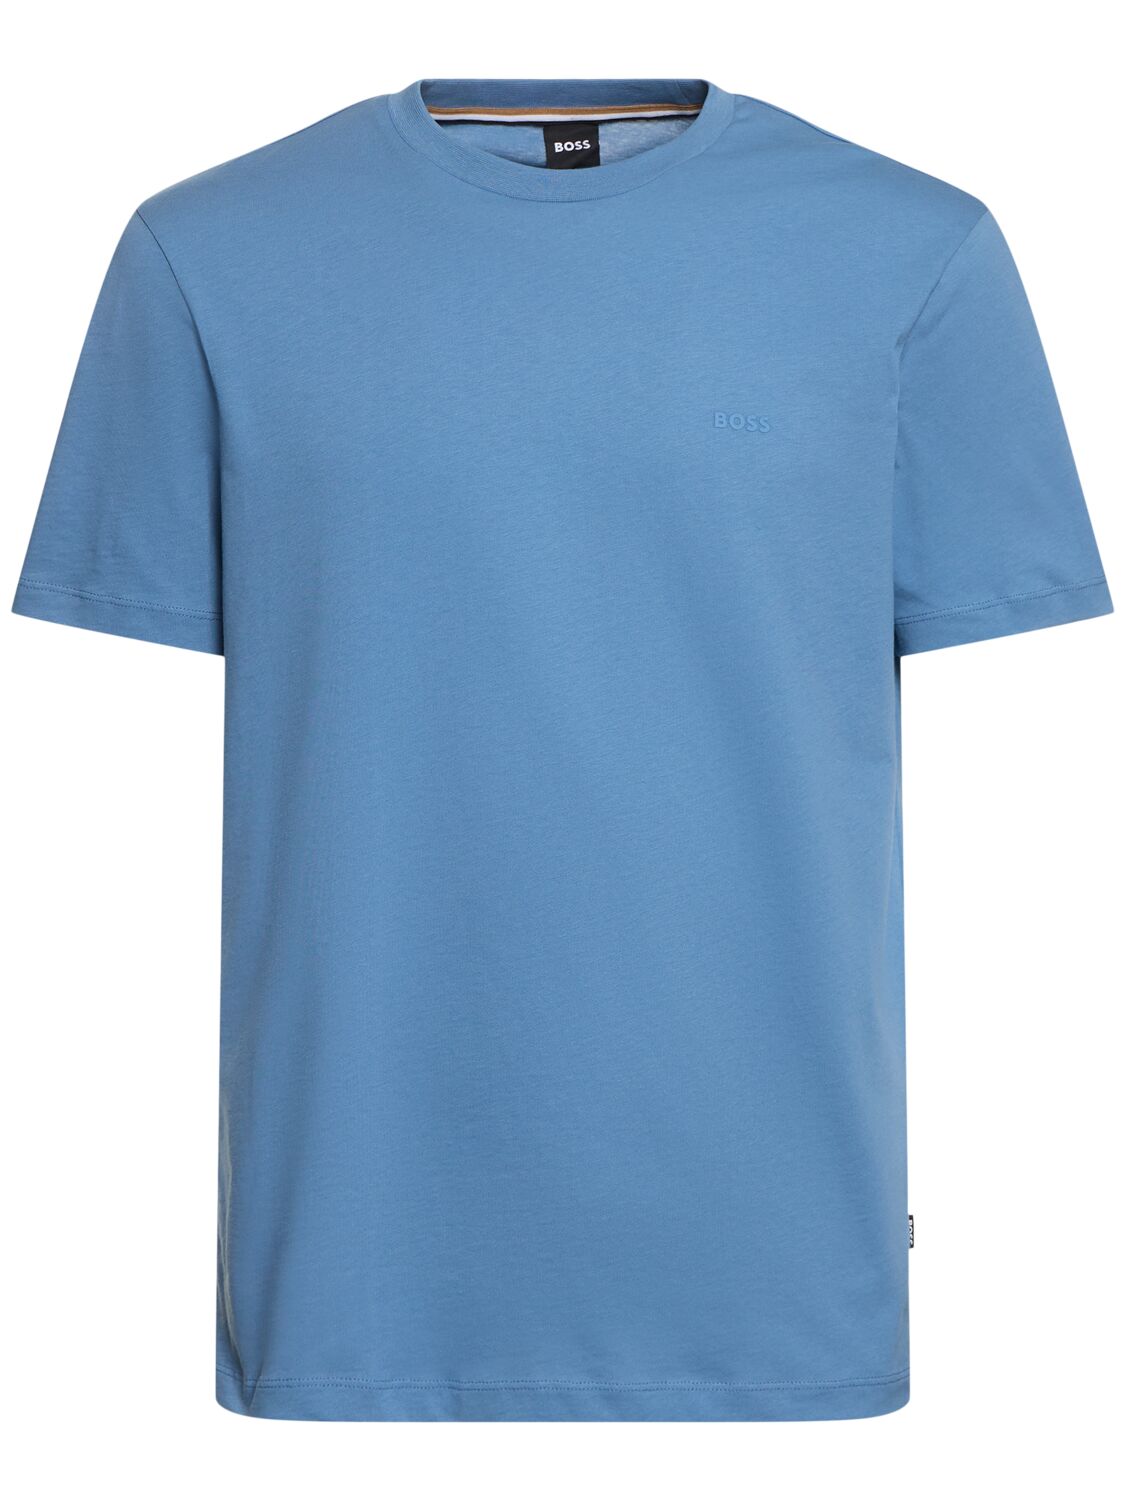 Hugo Boss Thompson Logo Cotton Jersey T-shirt In Light Blue